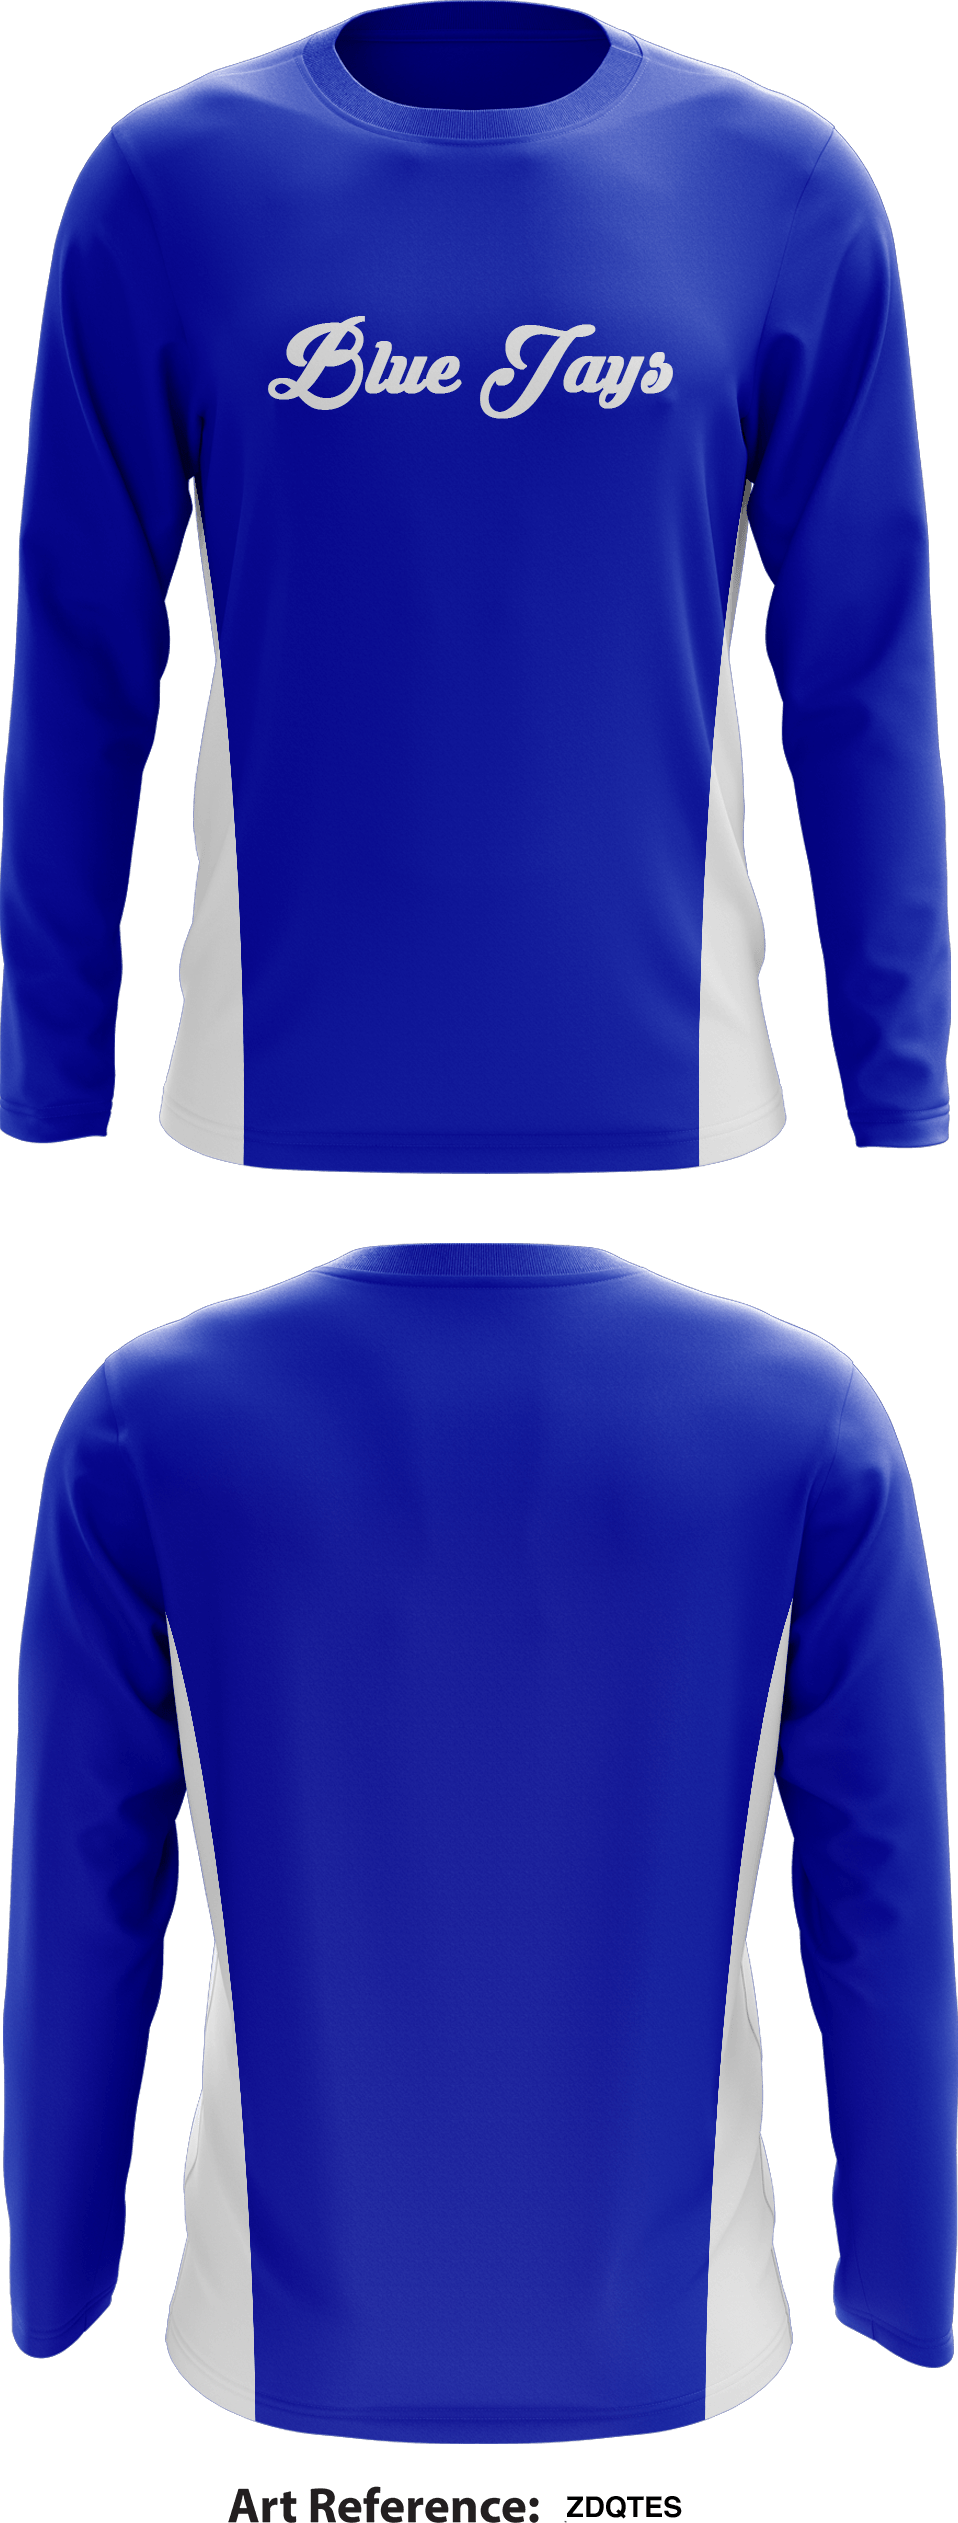 blue jays long sleeve shirt